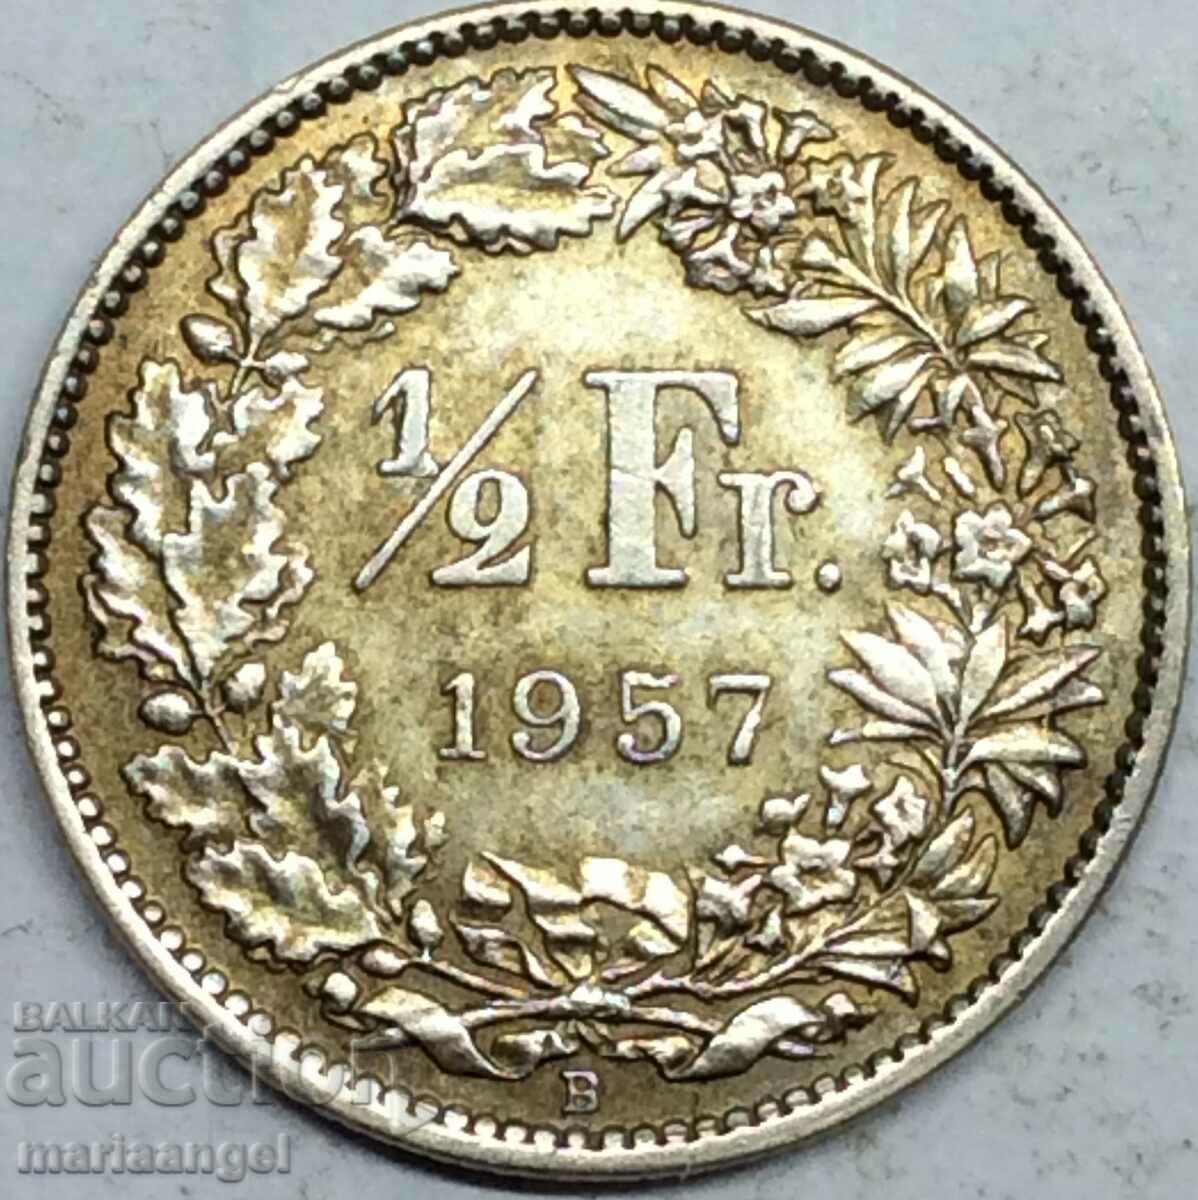 1/2 Franc 1959 Switzerland Helvetia Silver